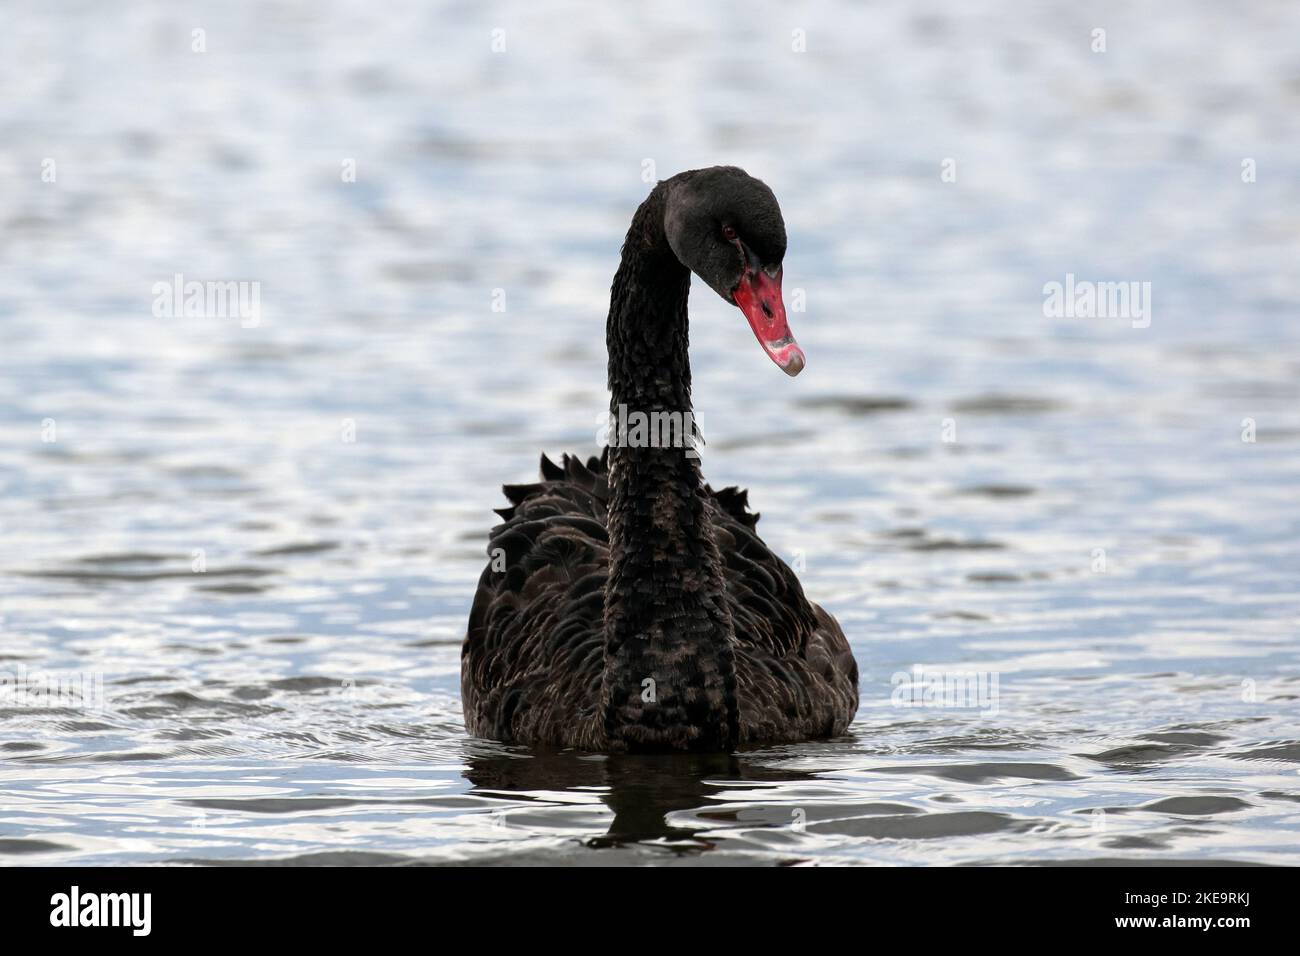 Black Swans, Sturt Pond, Keyhaven, Pennington Marshes nature reserve Stock Photo